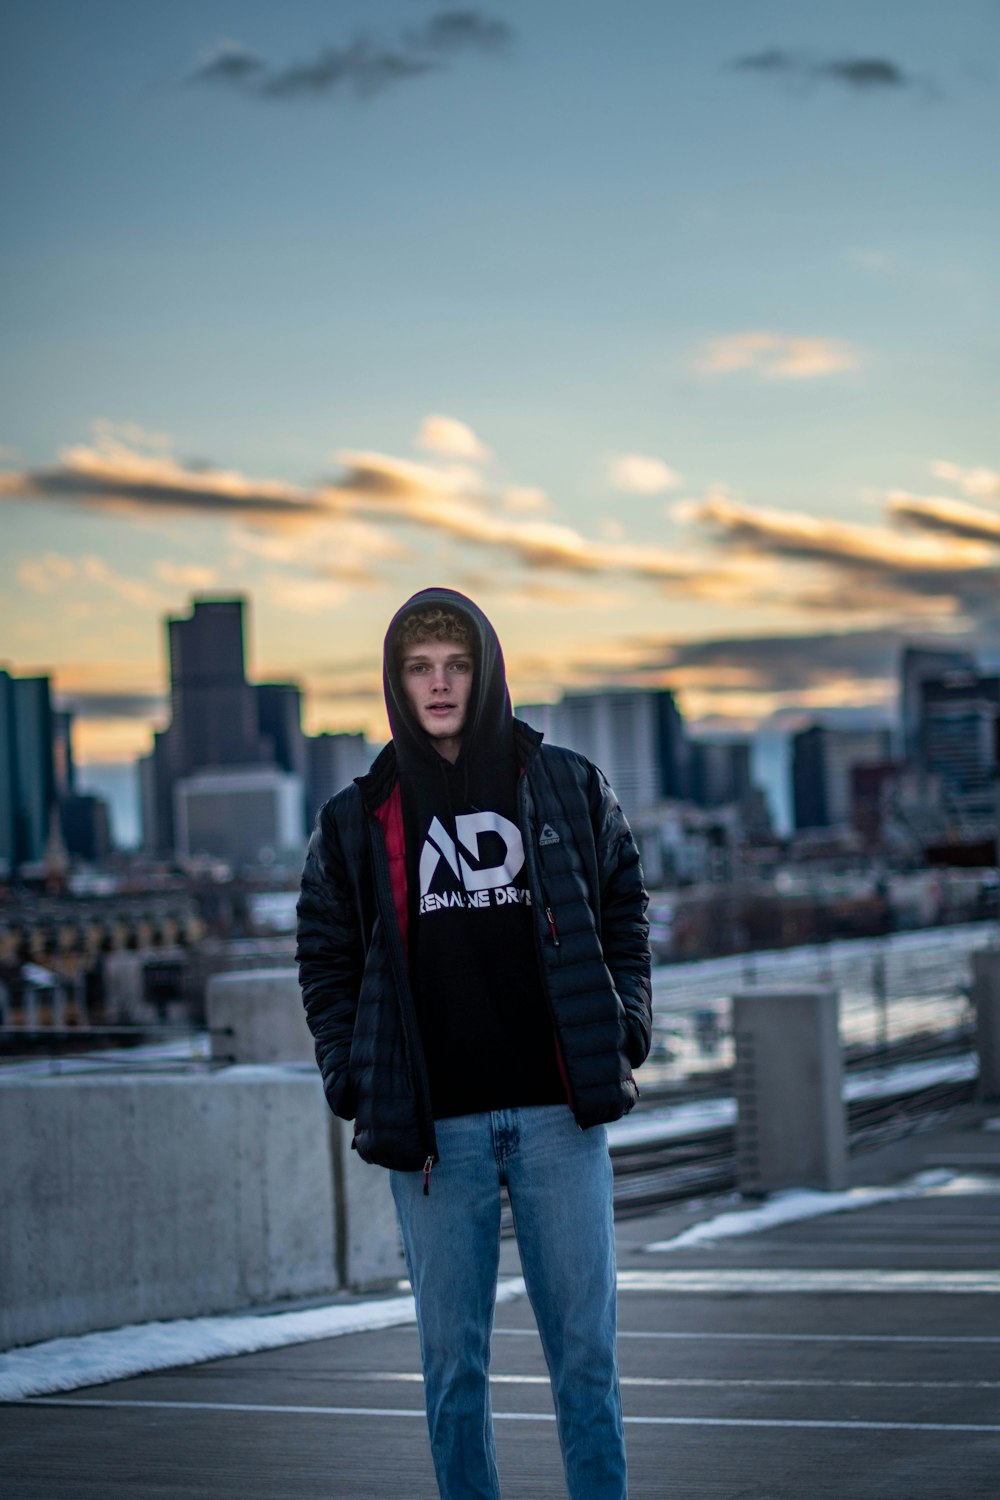 man in black and white hoodie photo – Free Denver Image on Unsplash